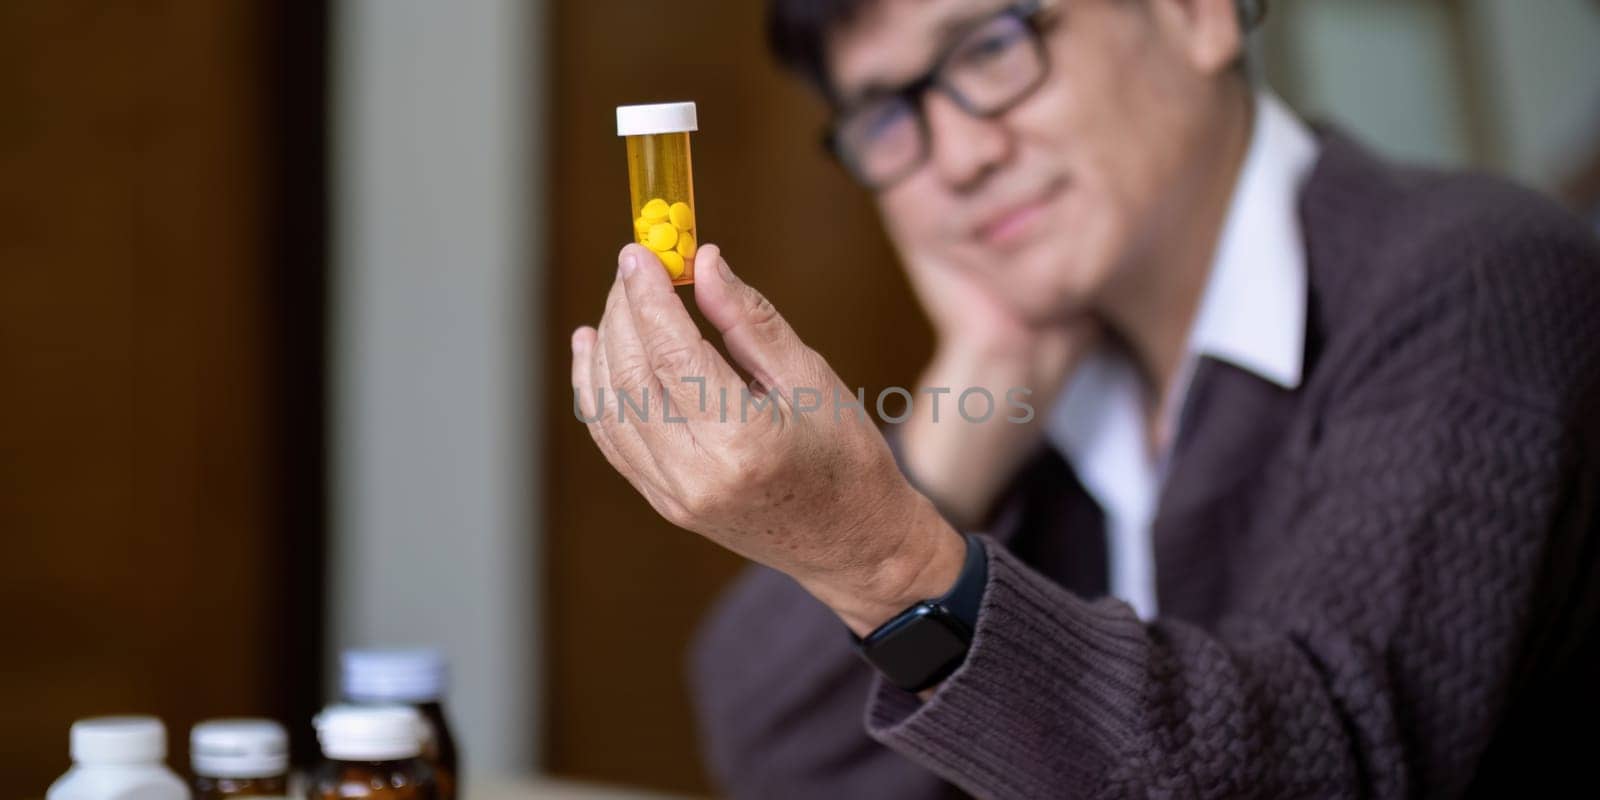 Senior asian man examining prescription medication at home.